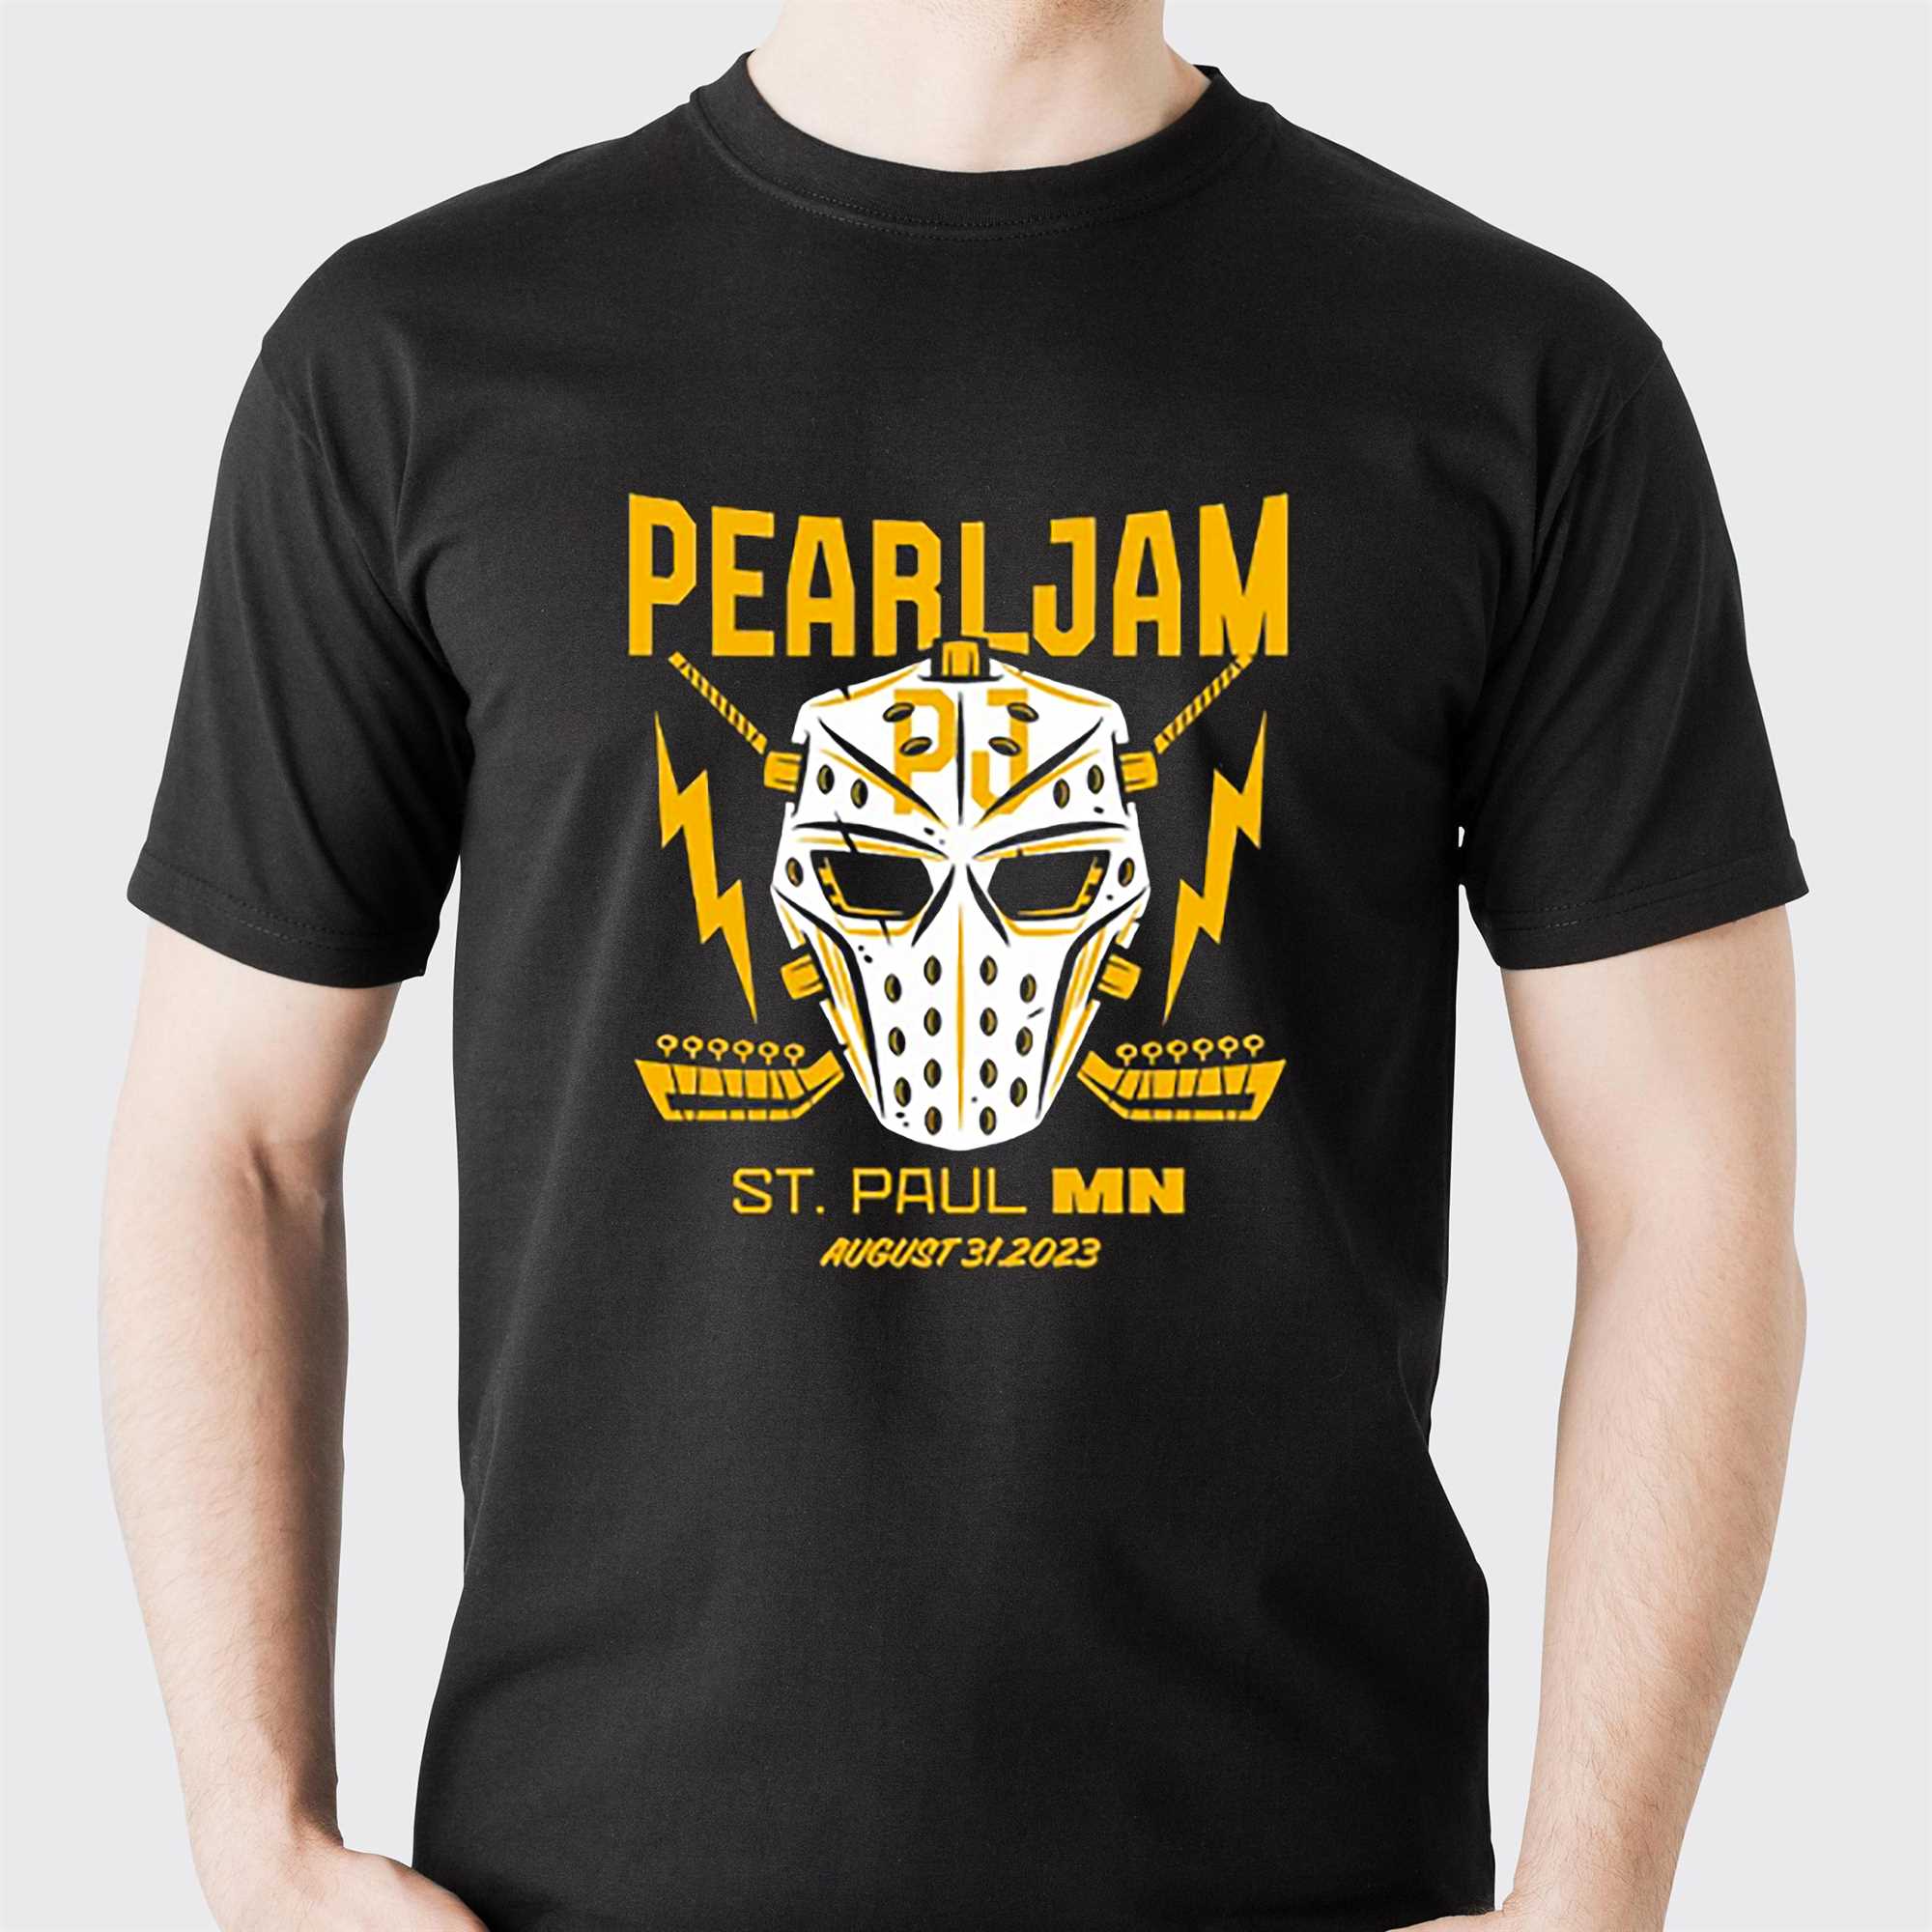 The Tops Pearl Jam T-Shirt